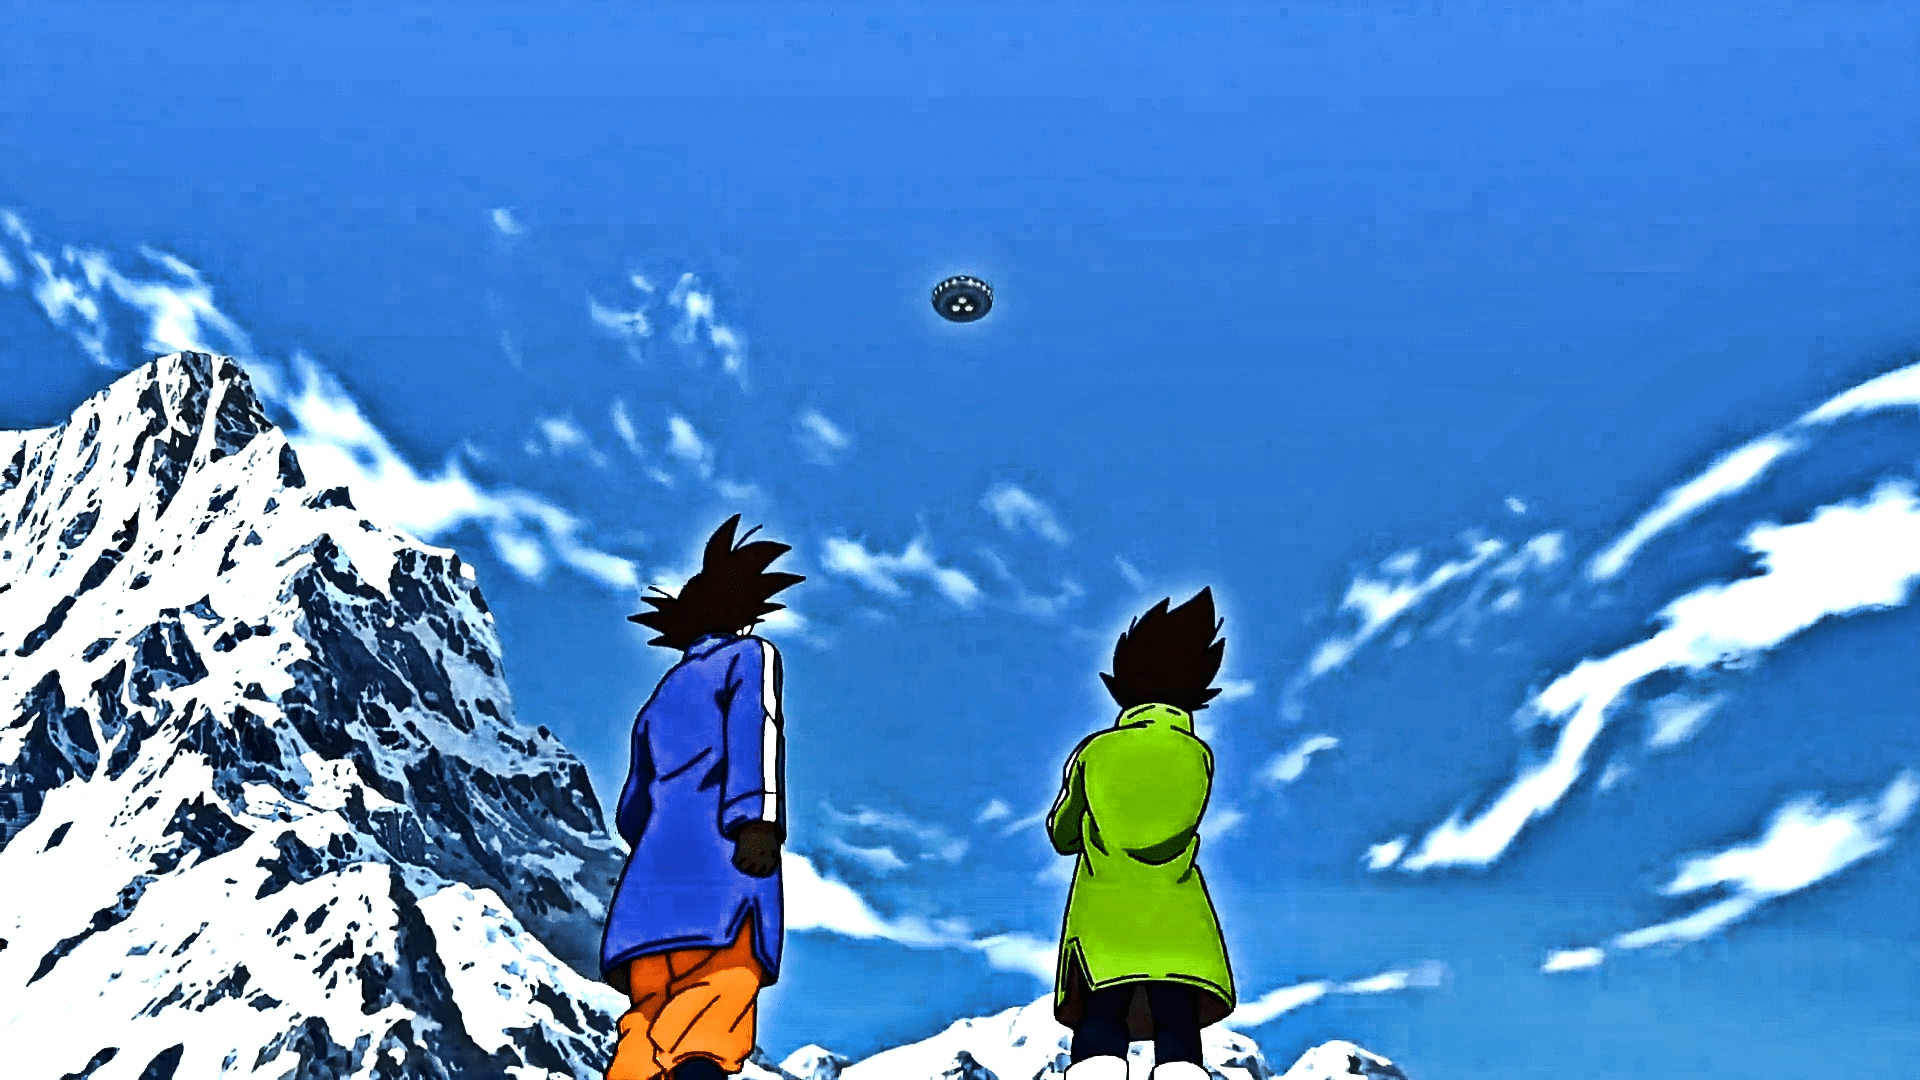 Goku and Vegeta in the mountains - Dragon Ball